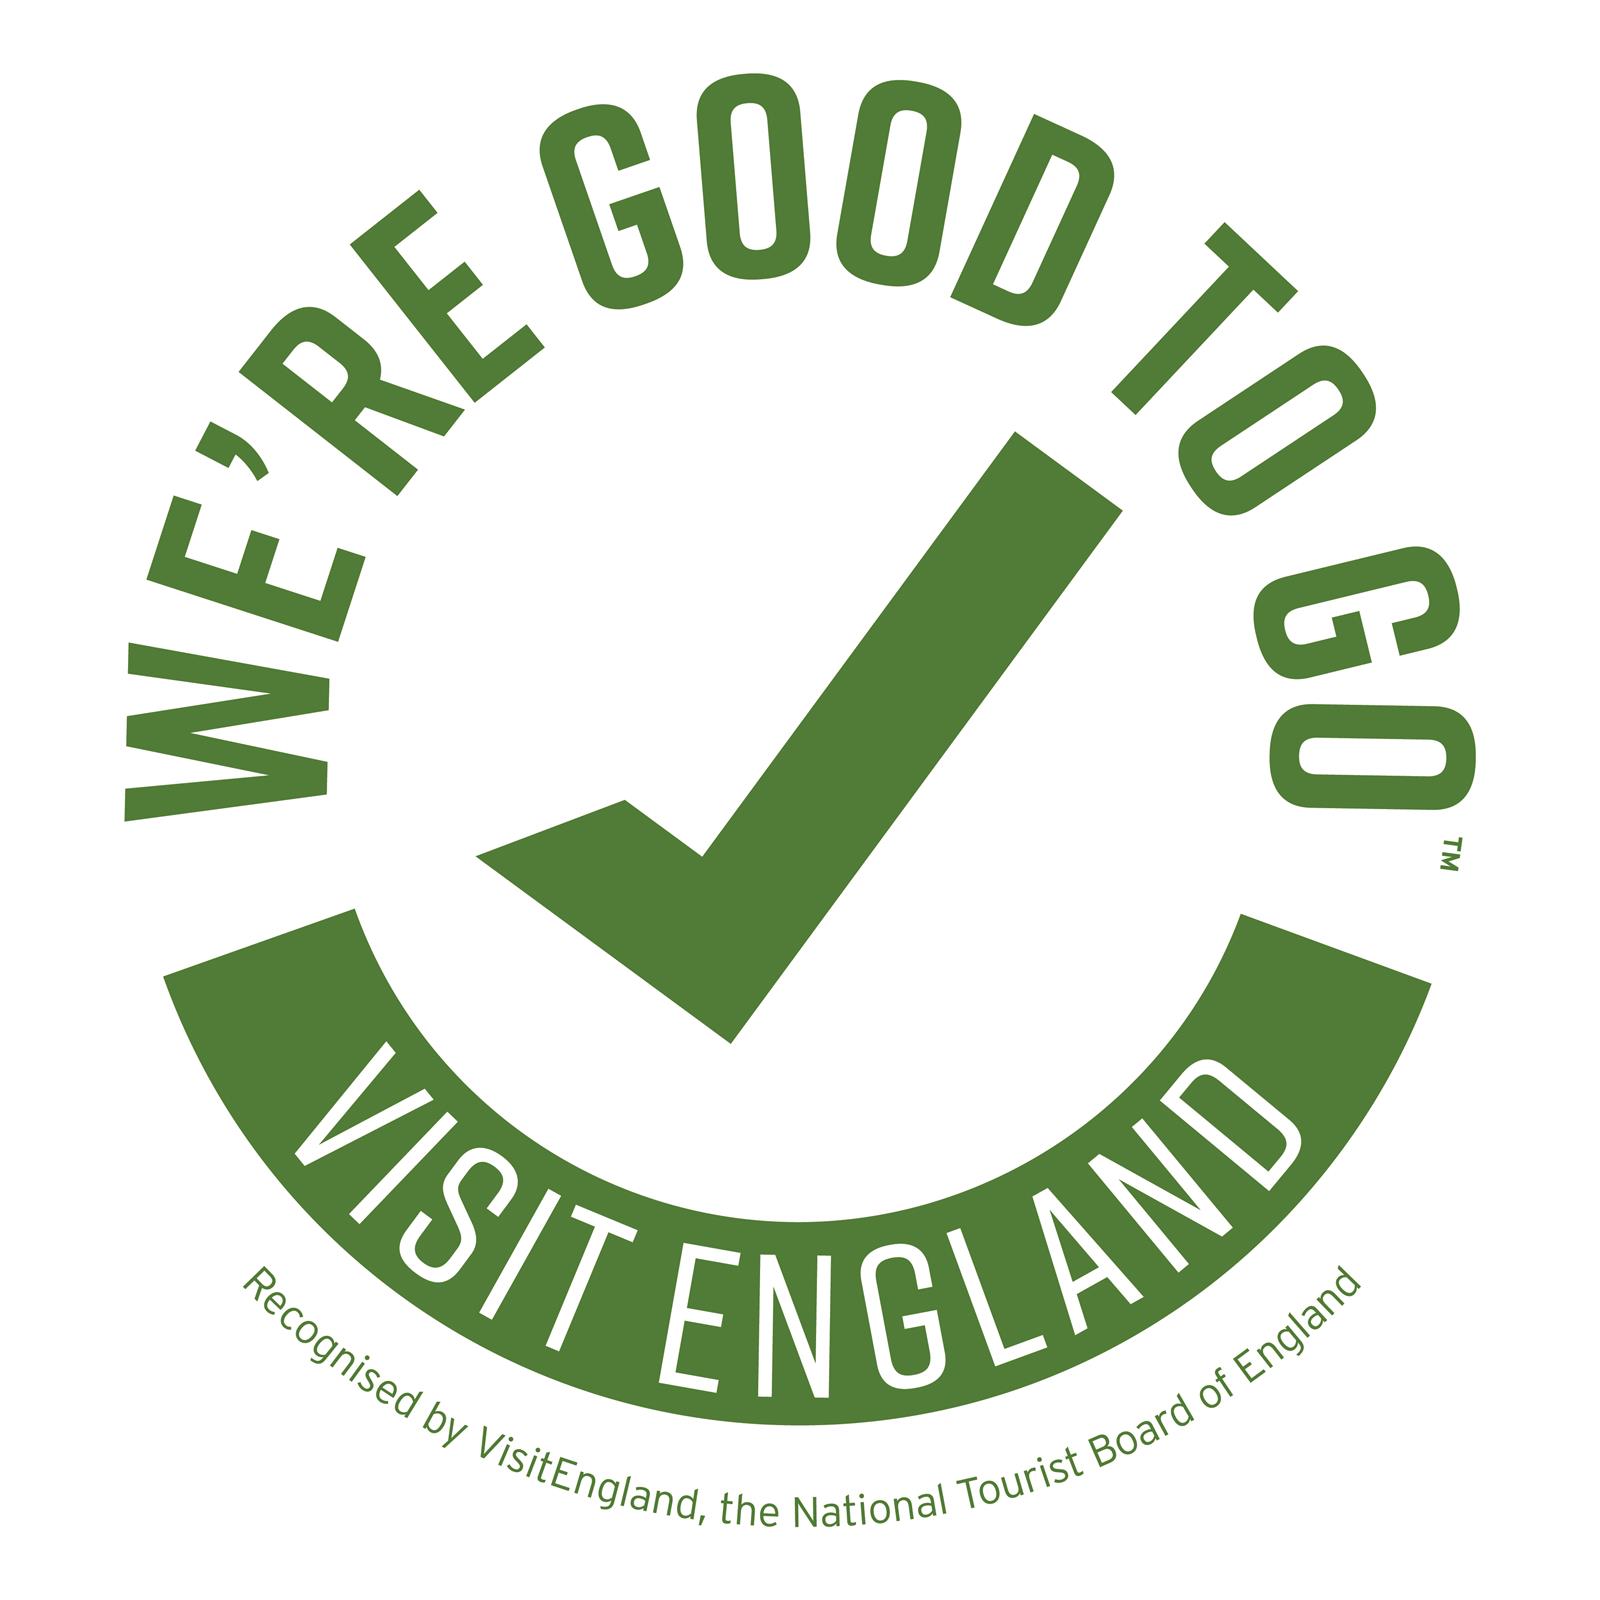 We're Good to Go - VisitEngland Covid-19 accreditation scheme